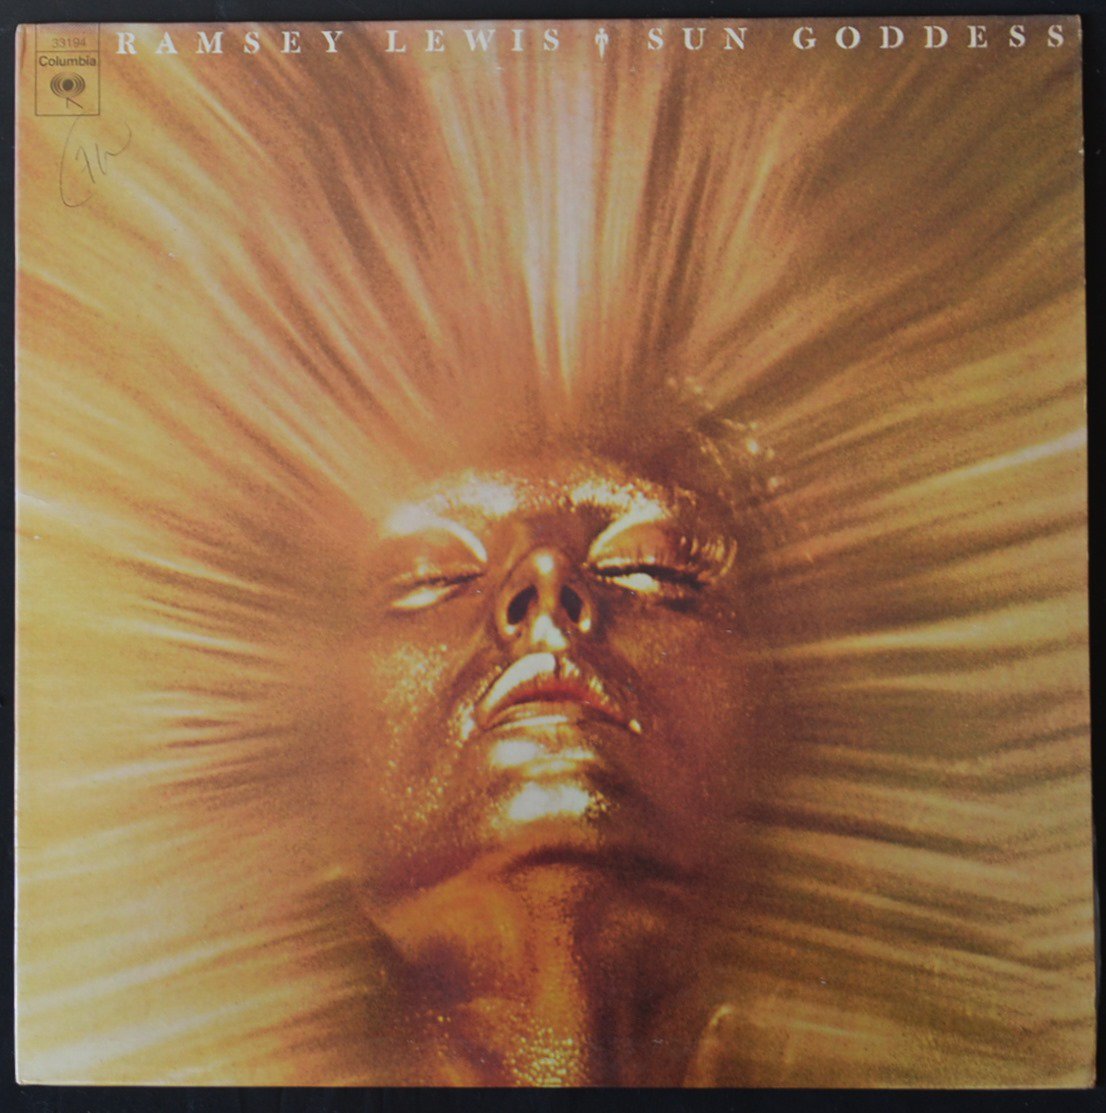 RAMSEY LEWIS ‎/ SUN GODDESS (LP)
